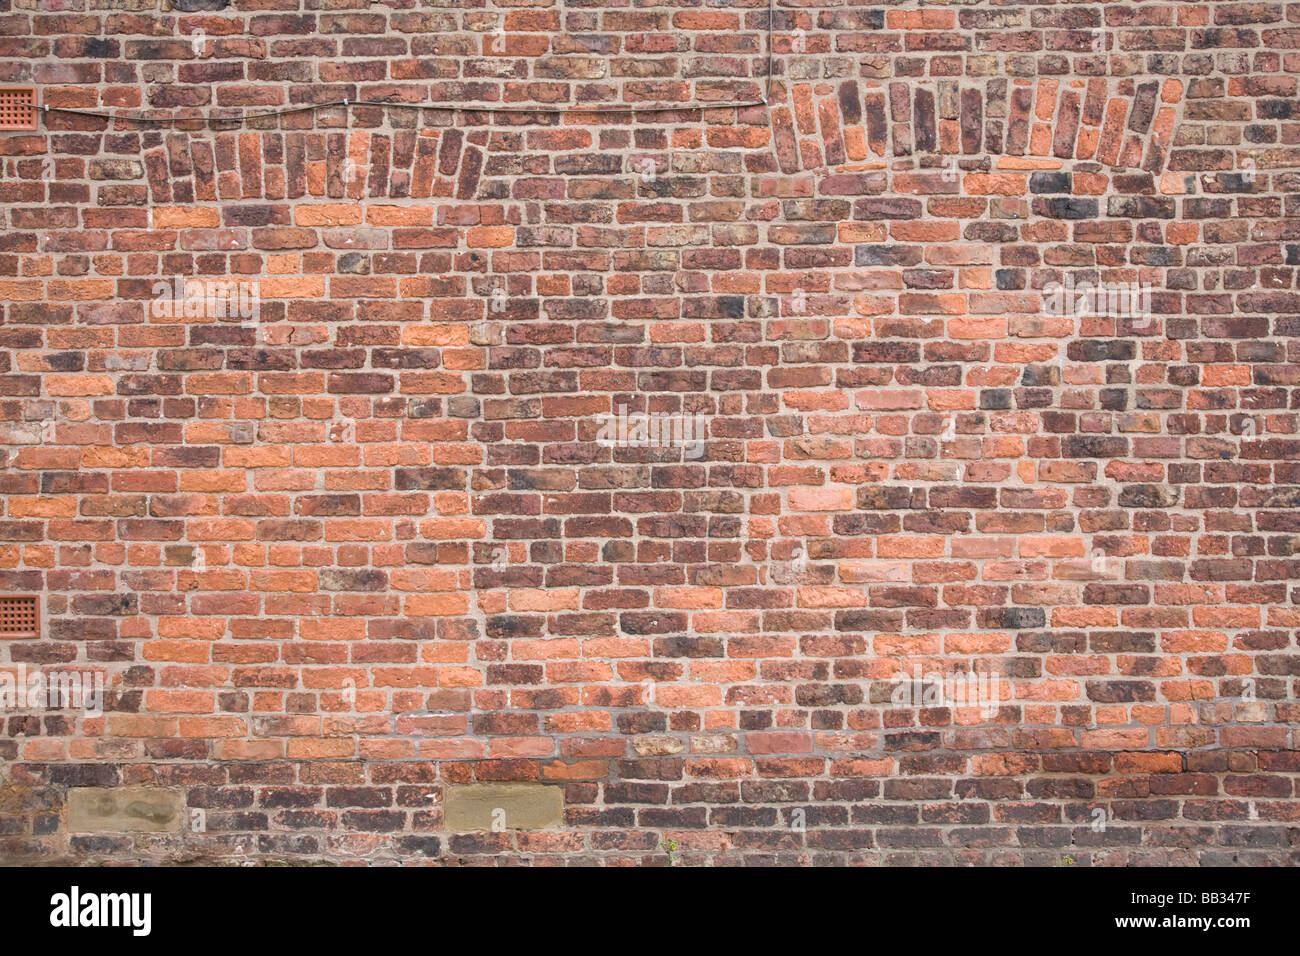 Brick wall with bricked up windows. Styal, Cheshire, United Kingdom. Stock Photo